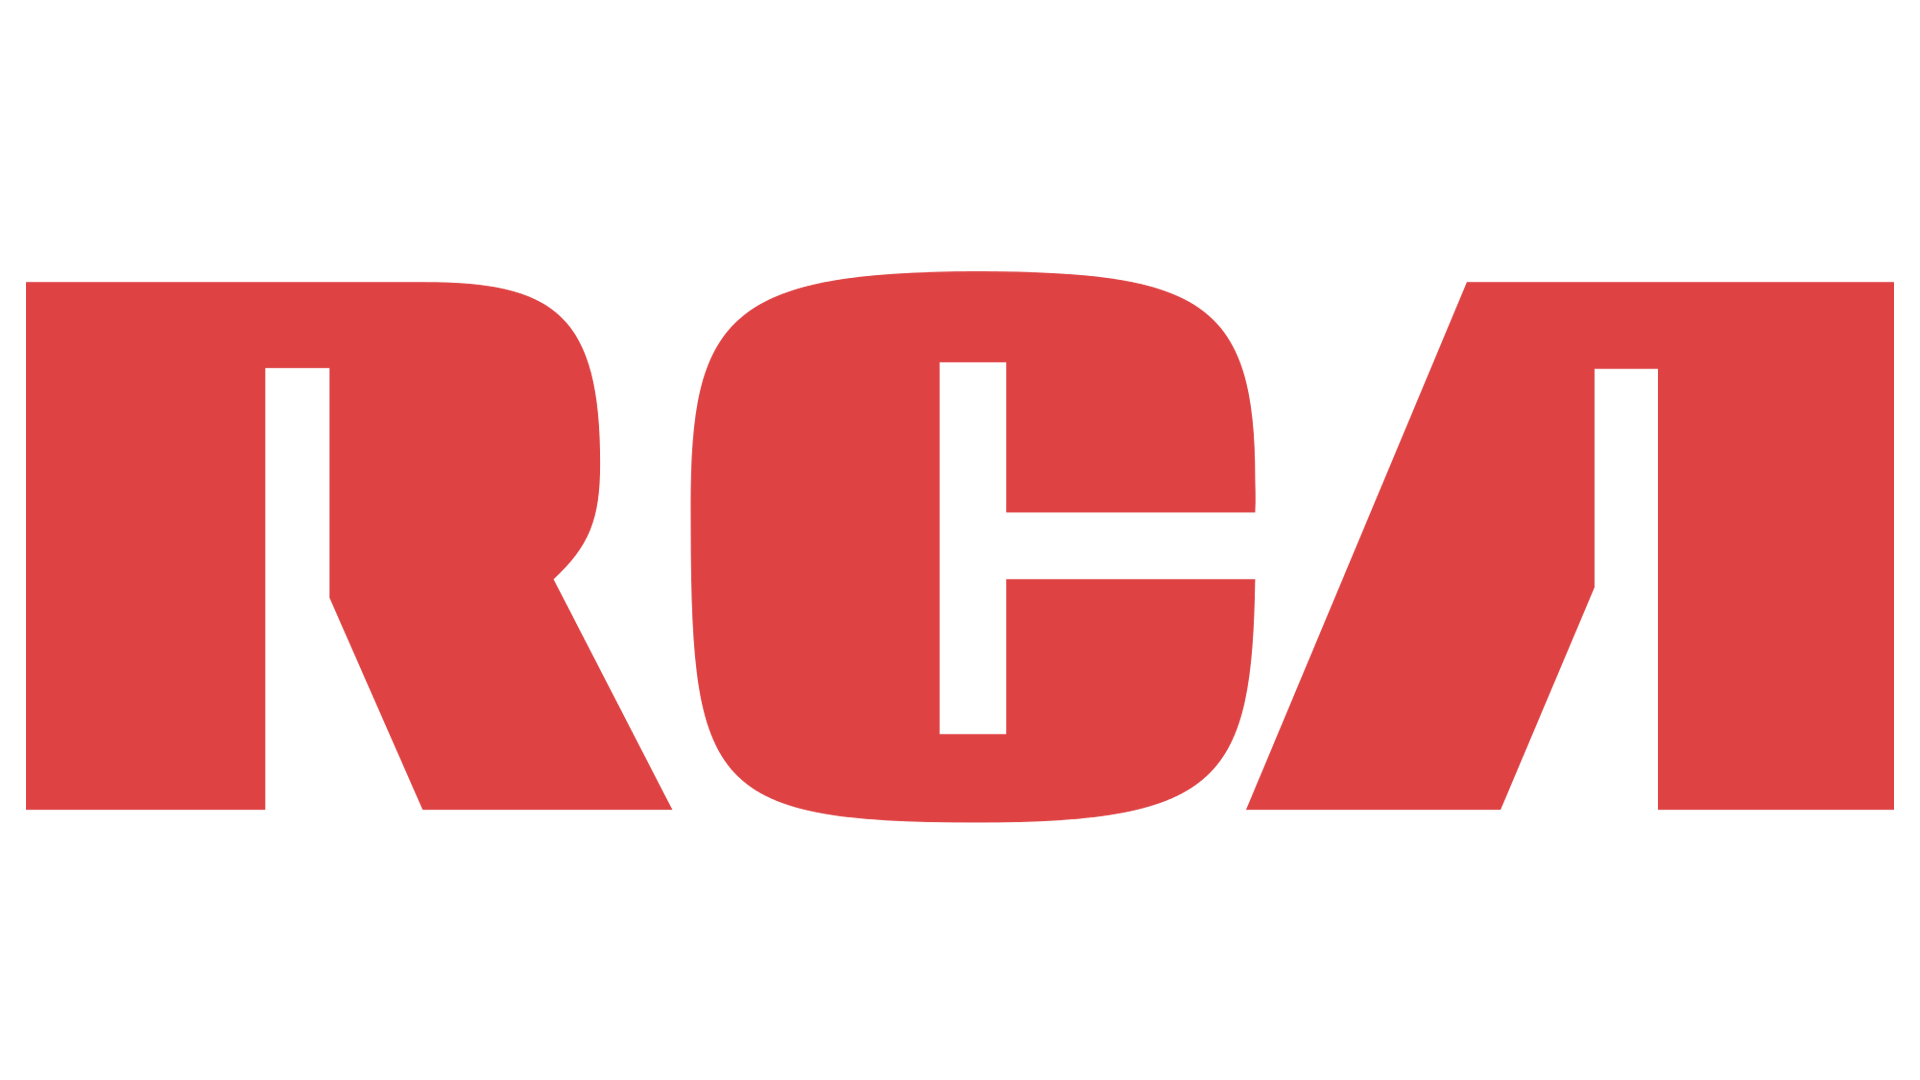 RCA Logo - Image - RCA logo.png | The Idea Wiki | FANDOM powered by Wikia